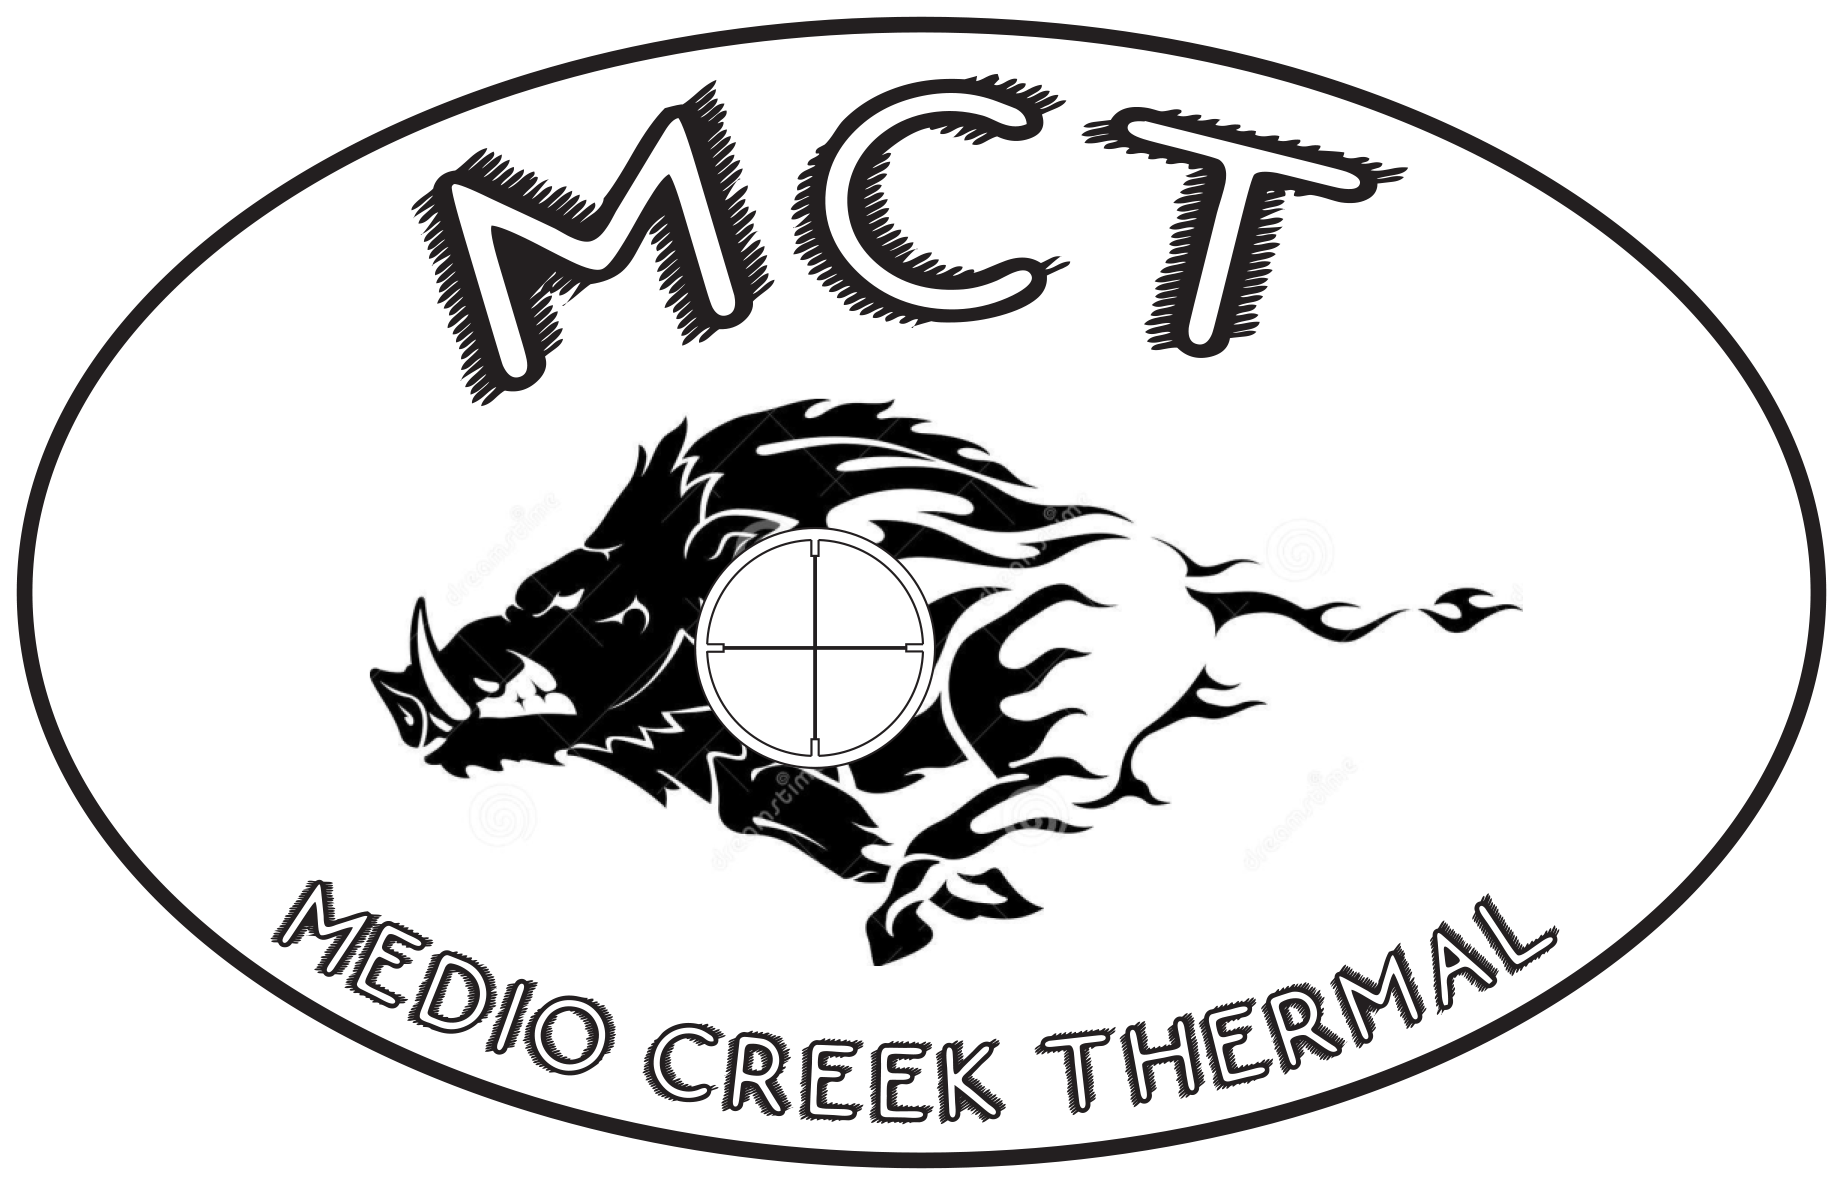 Medio Creek Thermal